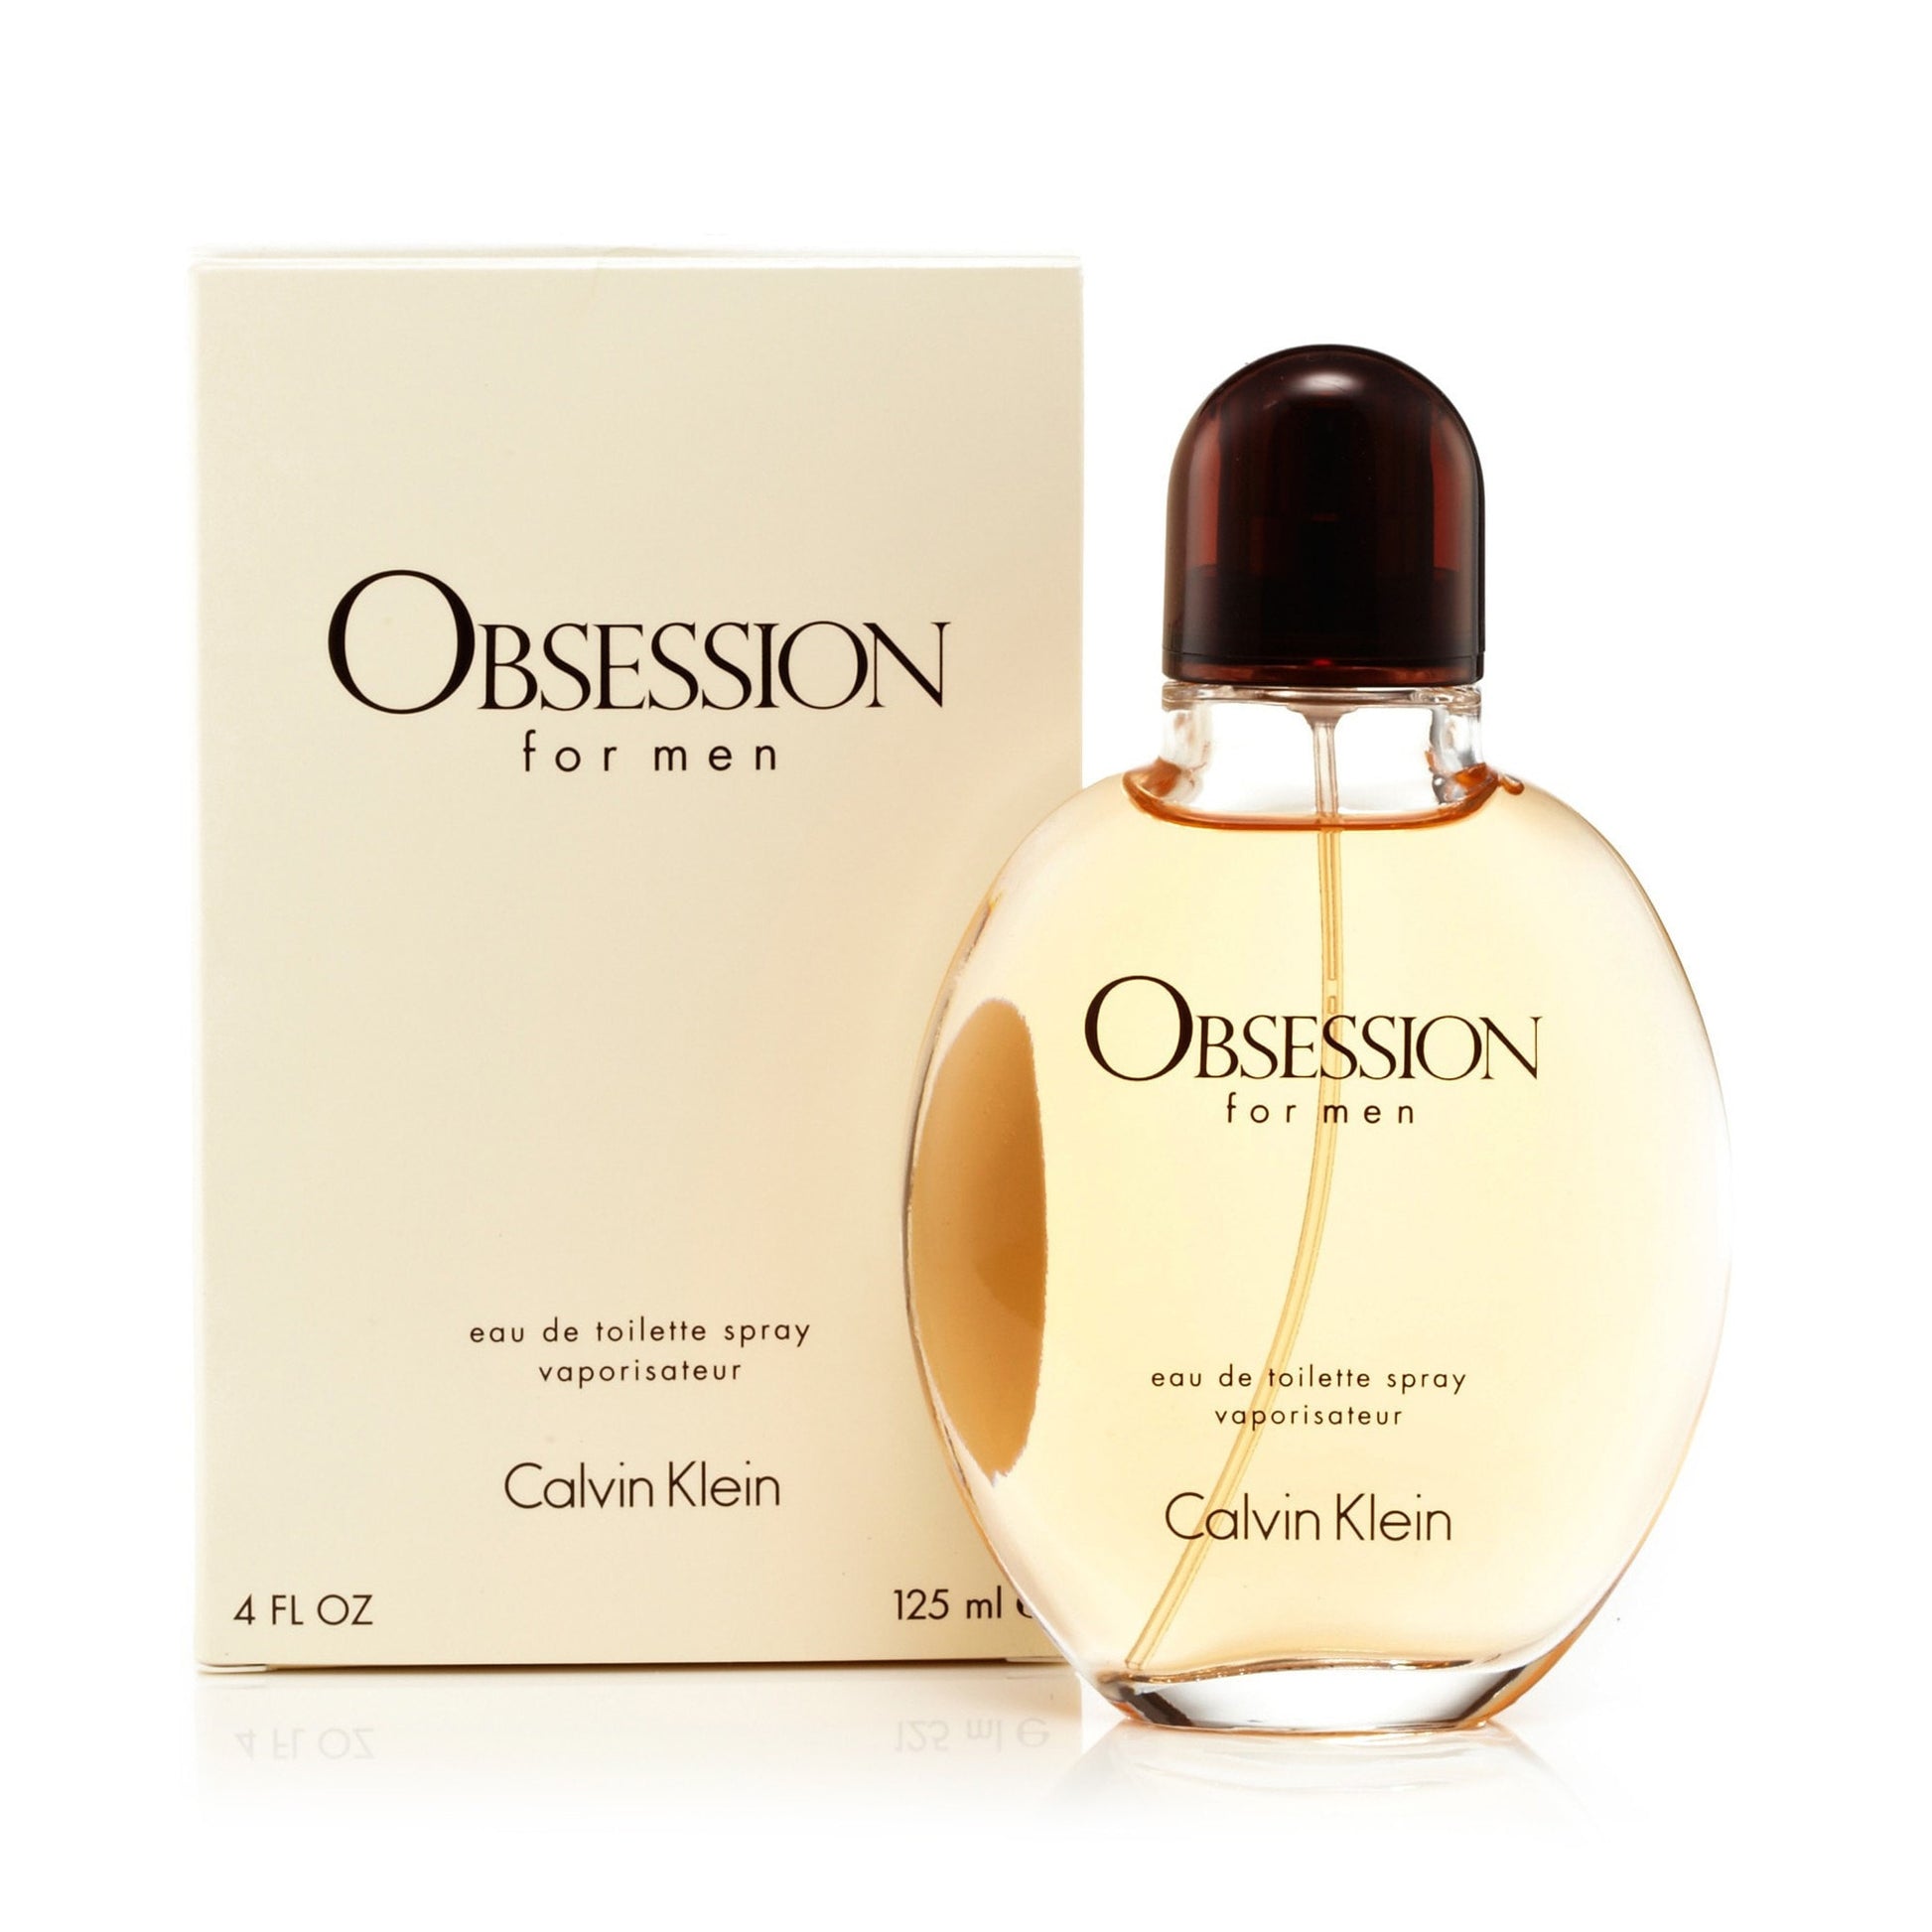 Obsession Eau de Toilette Spray for Men by Calvin Klein 4.0 oz. Click to open in modal